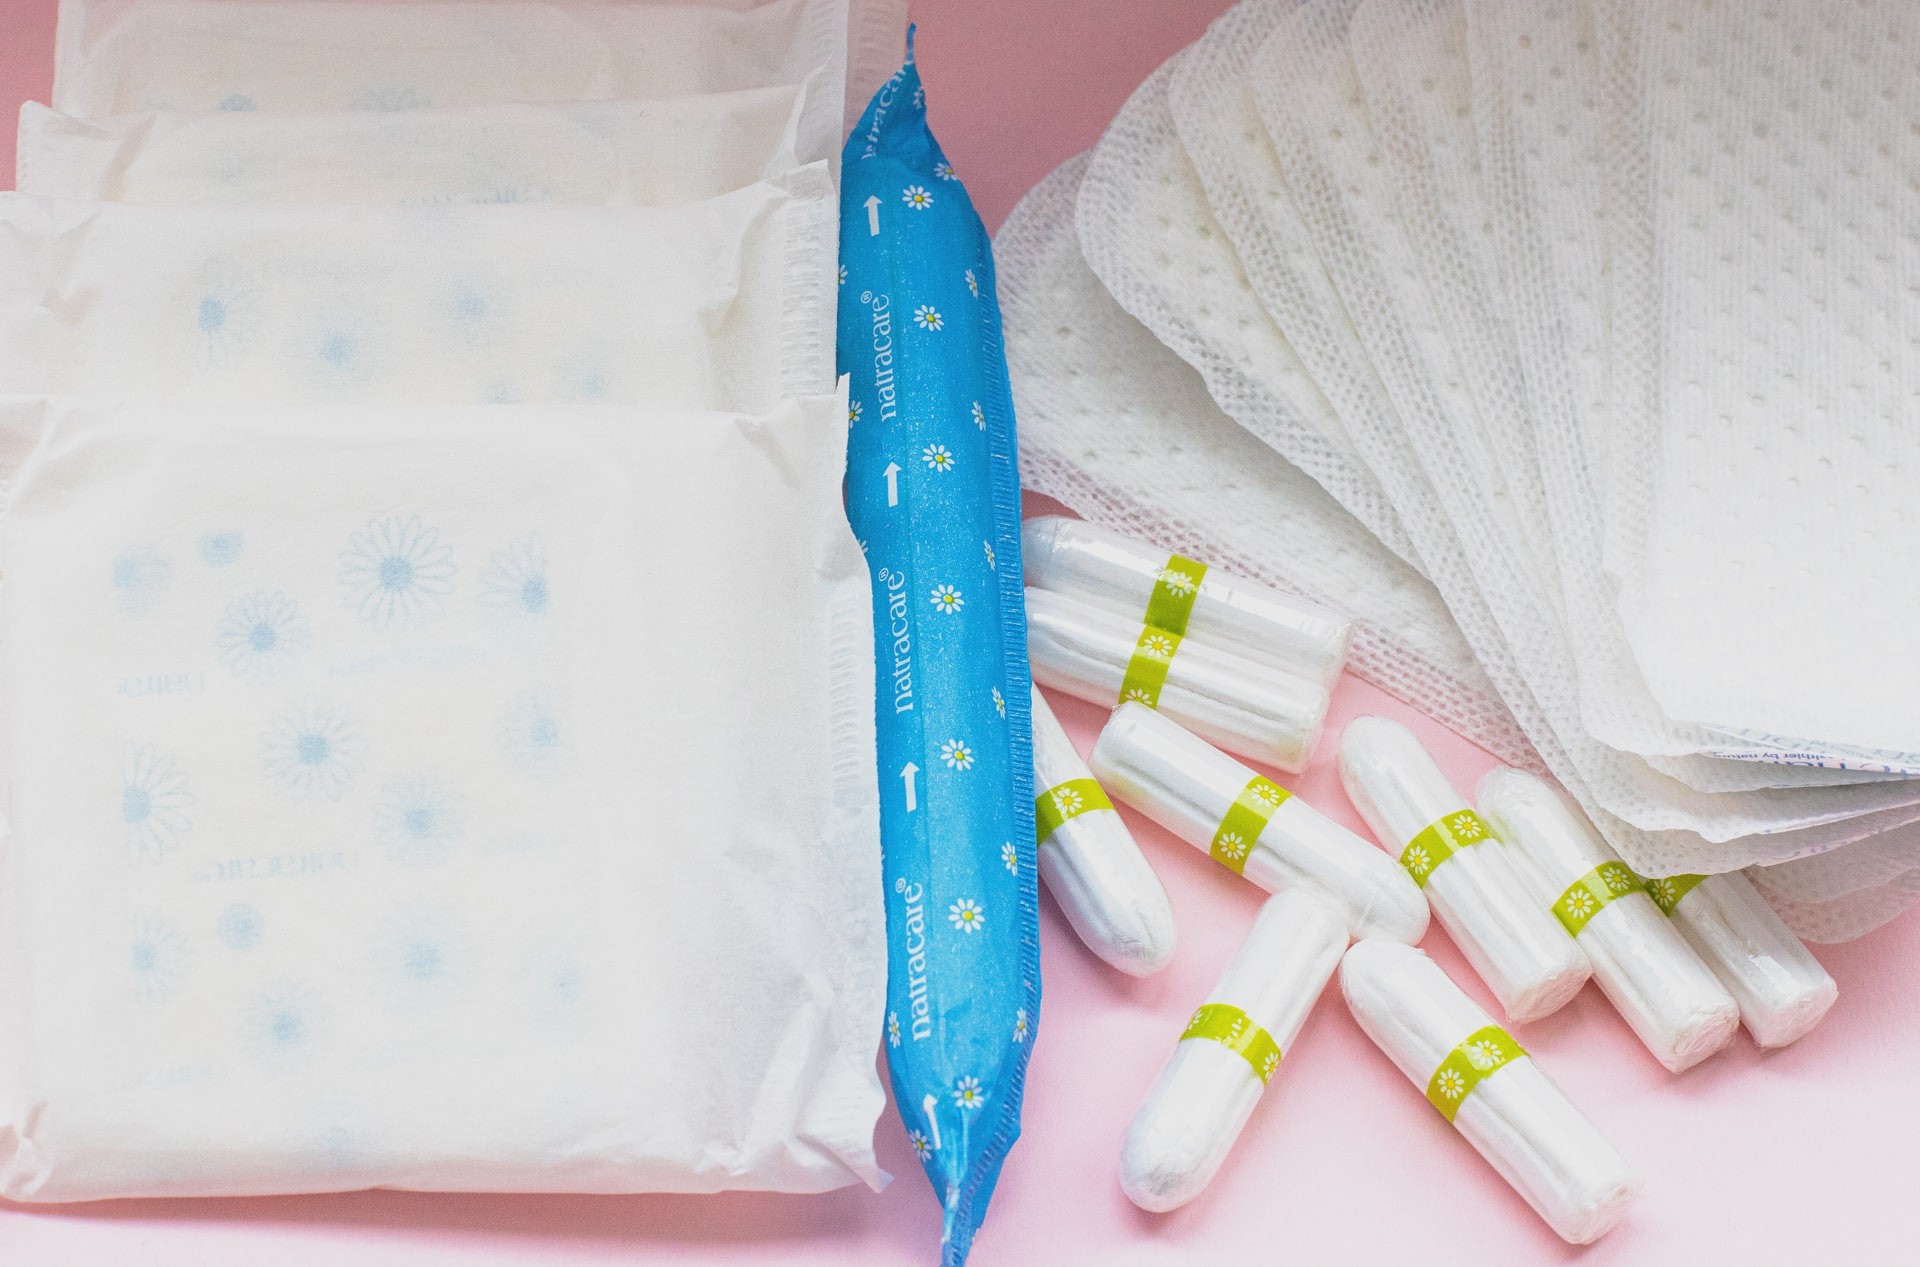 SP distribuirá itens de higiene menstrual a estudantes da rede estadual (Foto: Natracare/Unsplash)